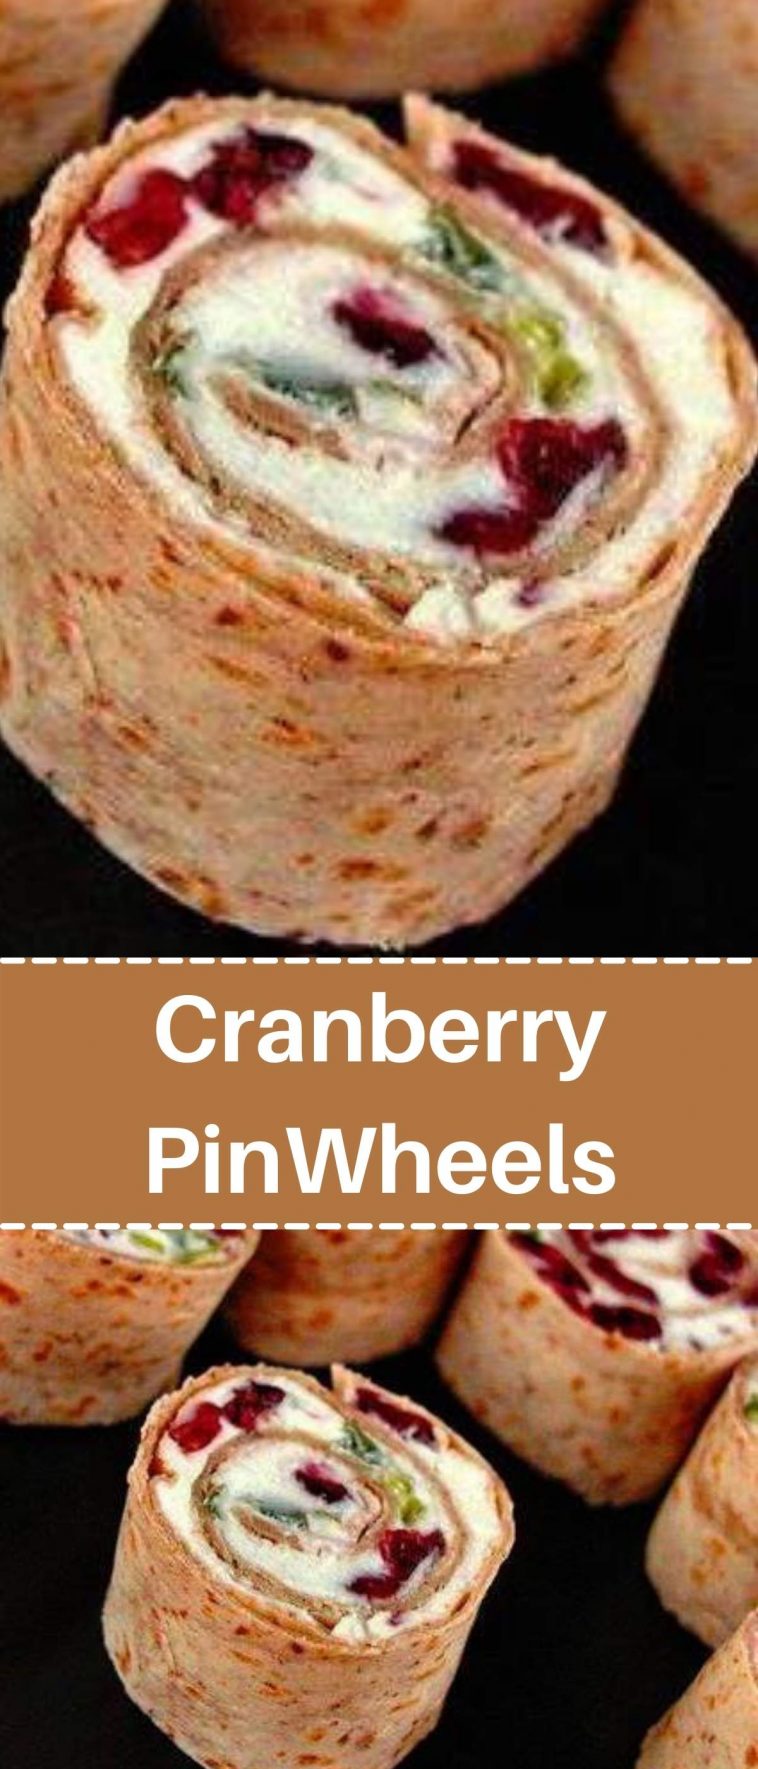 Cranberry PinWheels